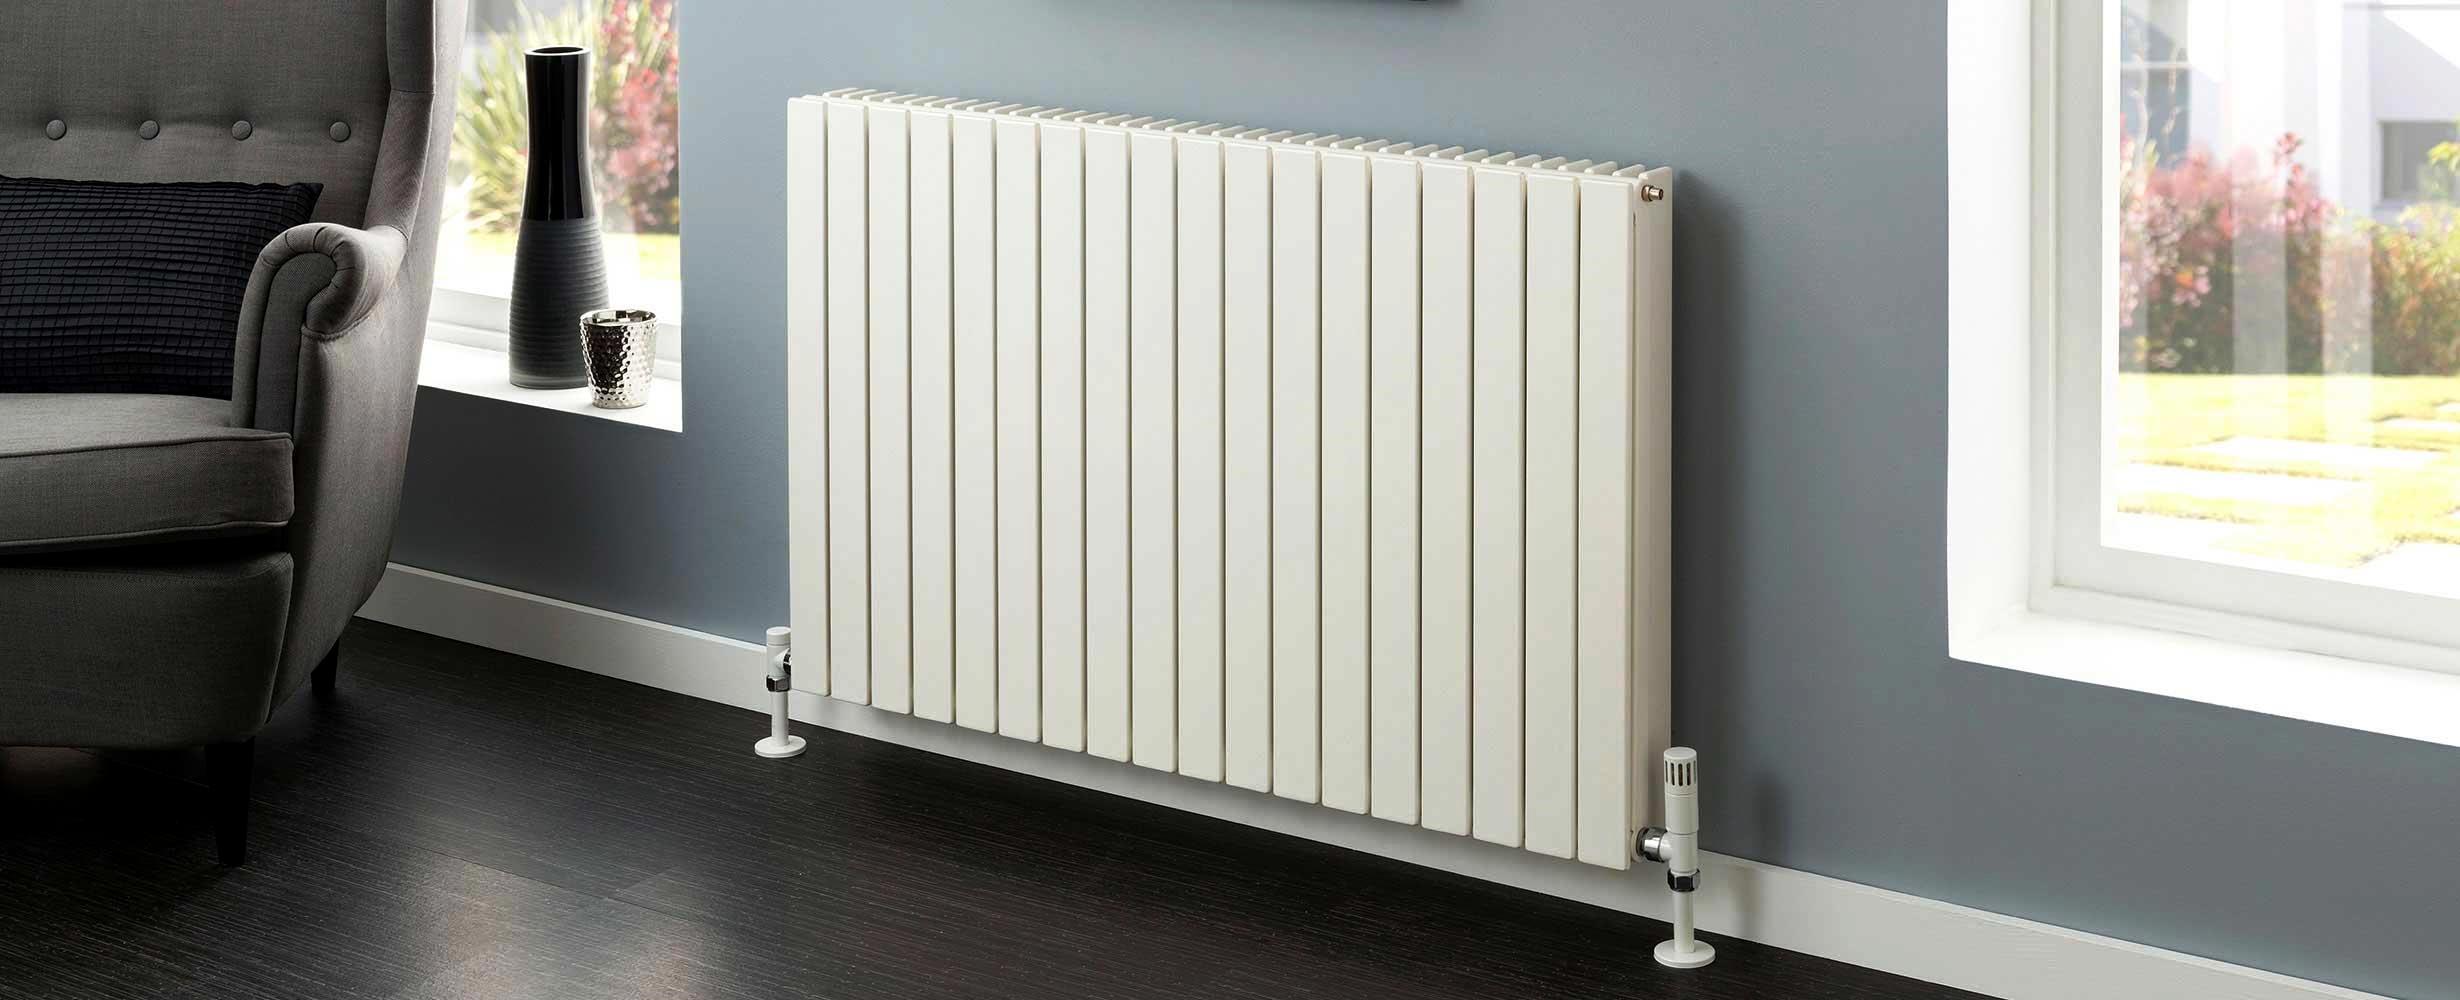 Rating of the best bimetallic heating radiators for 2020